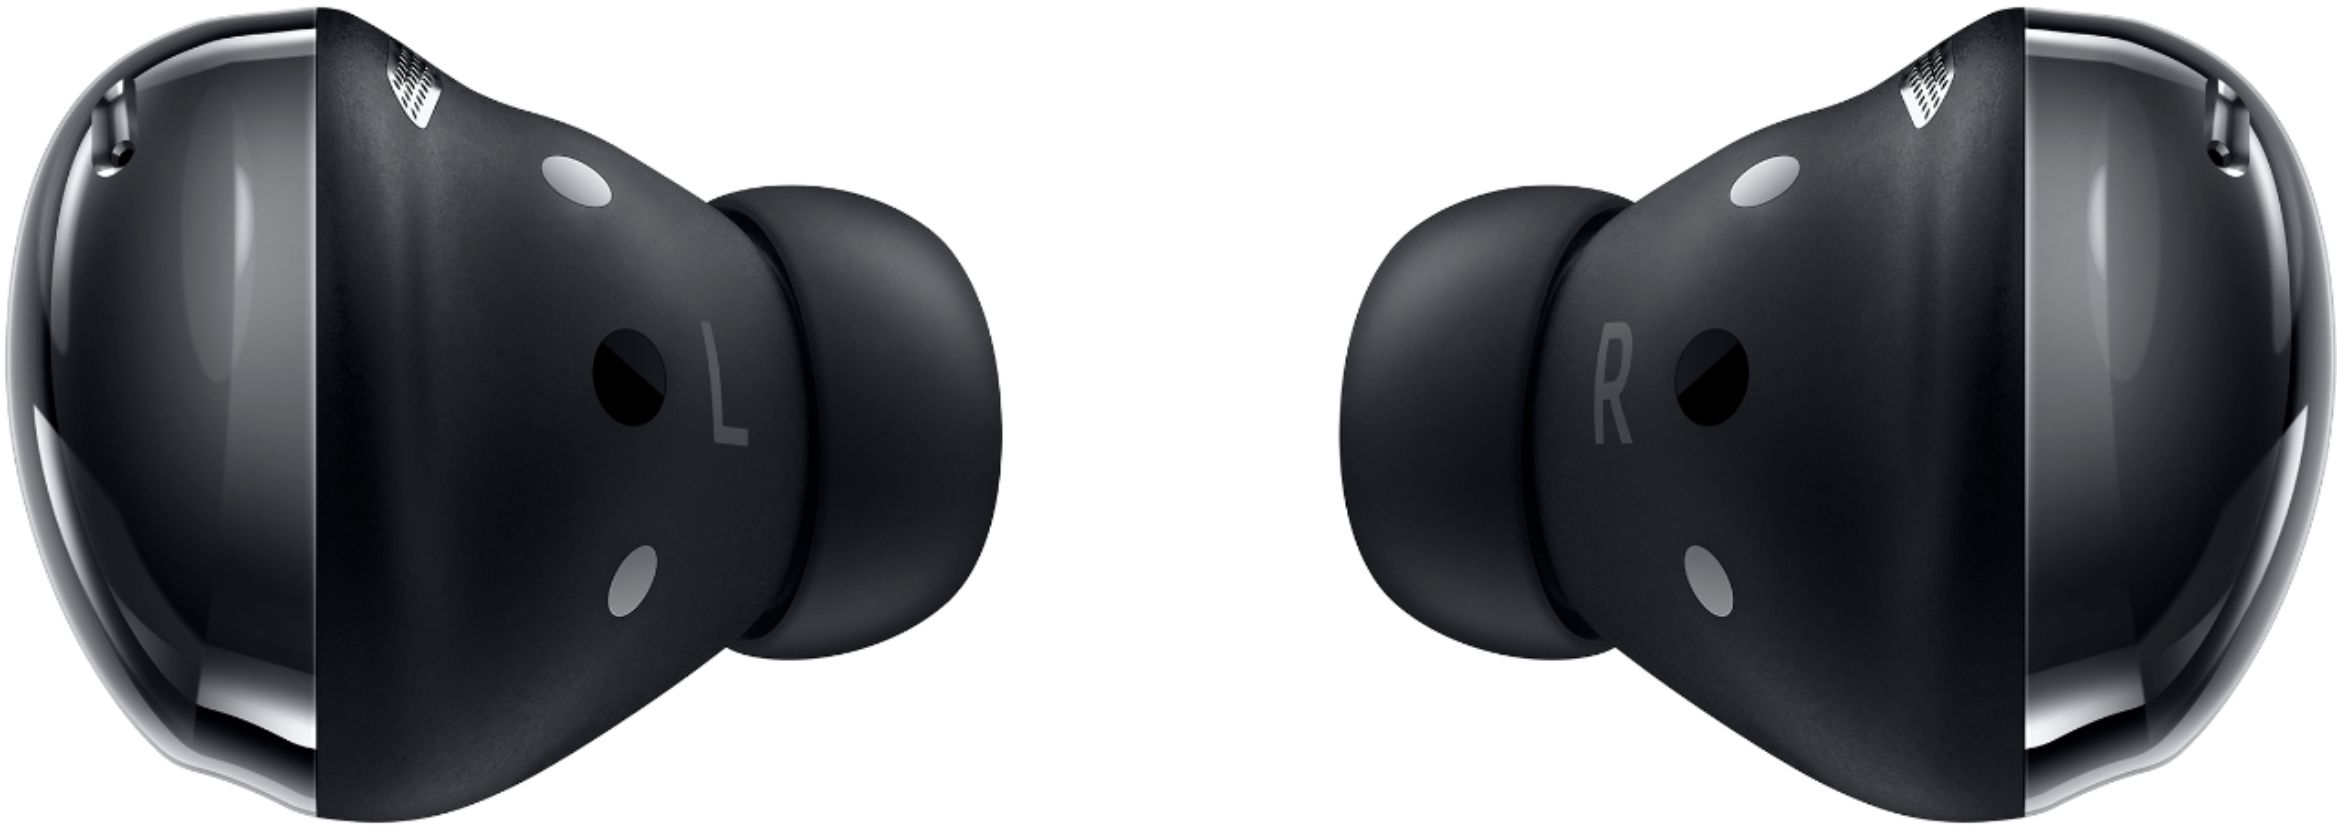 Samsung - Galaxy Buds Pro True Wireless Earbud Headphones - Phantom Black